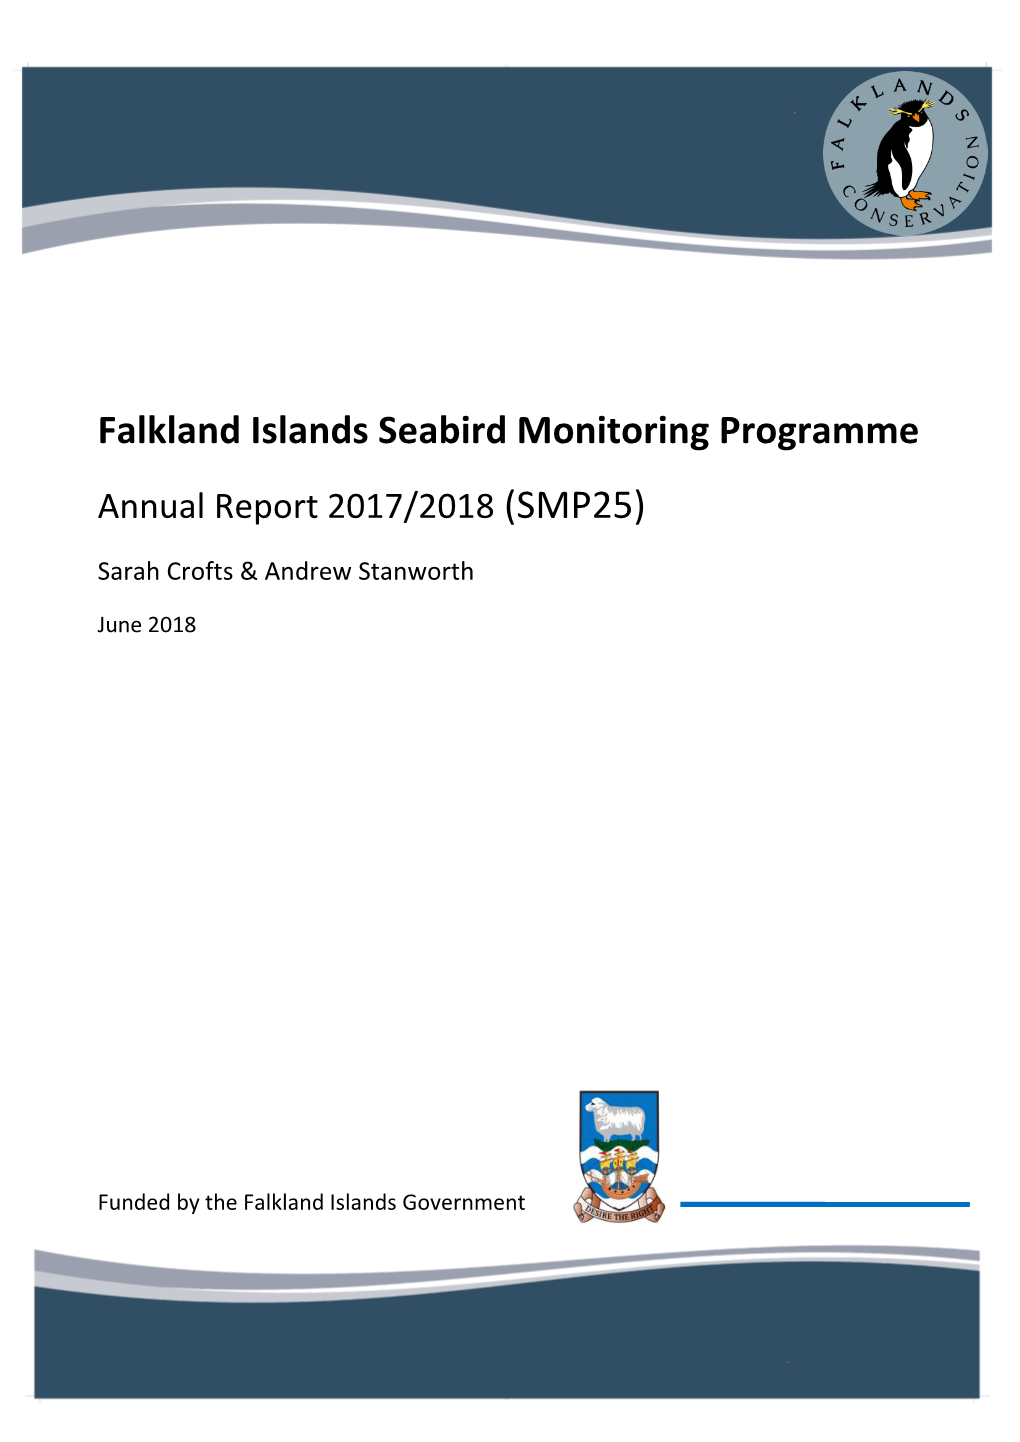 Falkland Islands Seabird Monitoring Programme Annual Report 2017/2018 (SMP25)